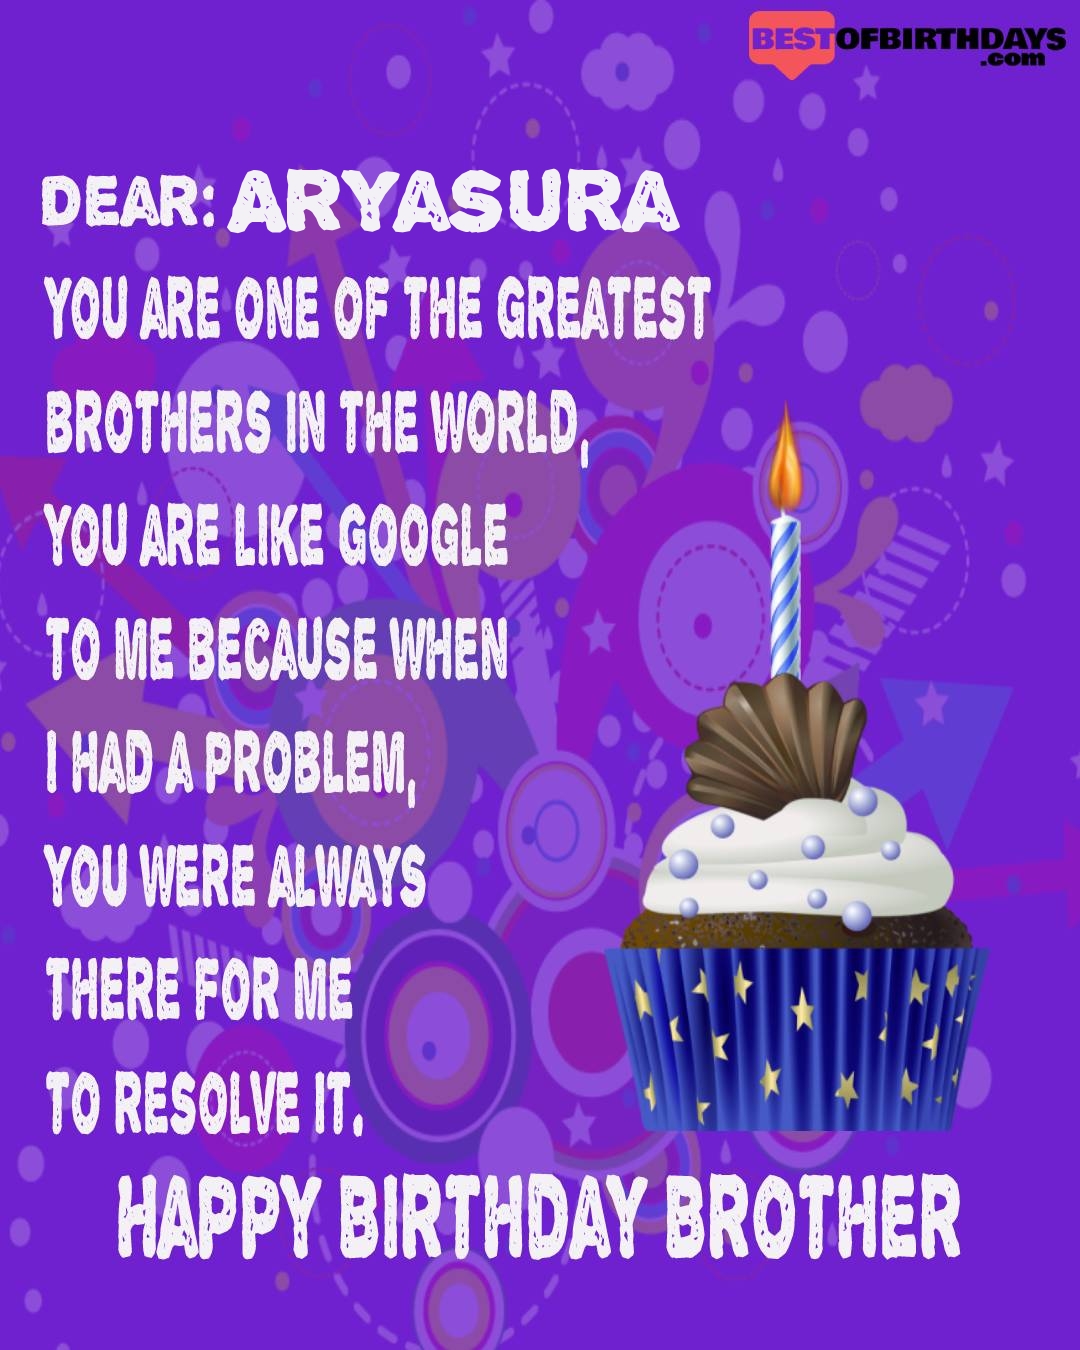 Happy birthday aryasura bhai brother bro